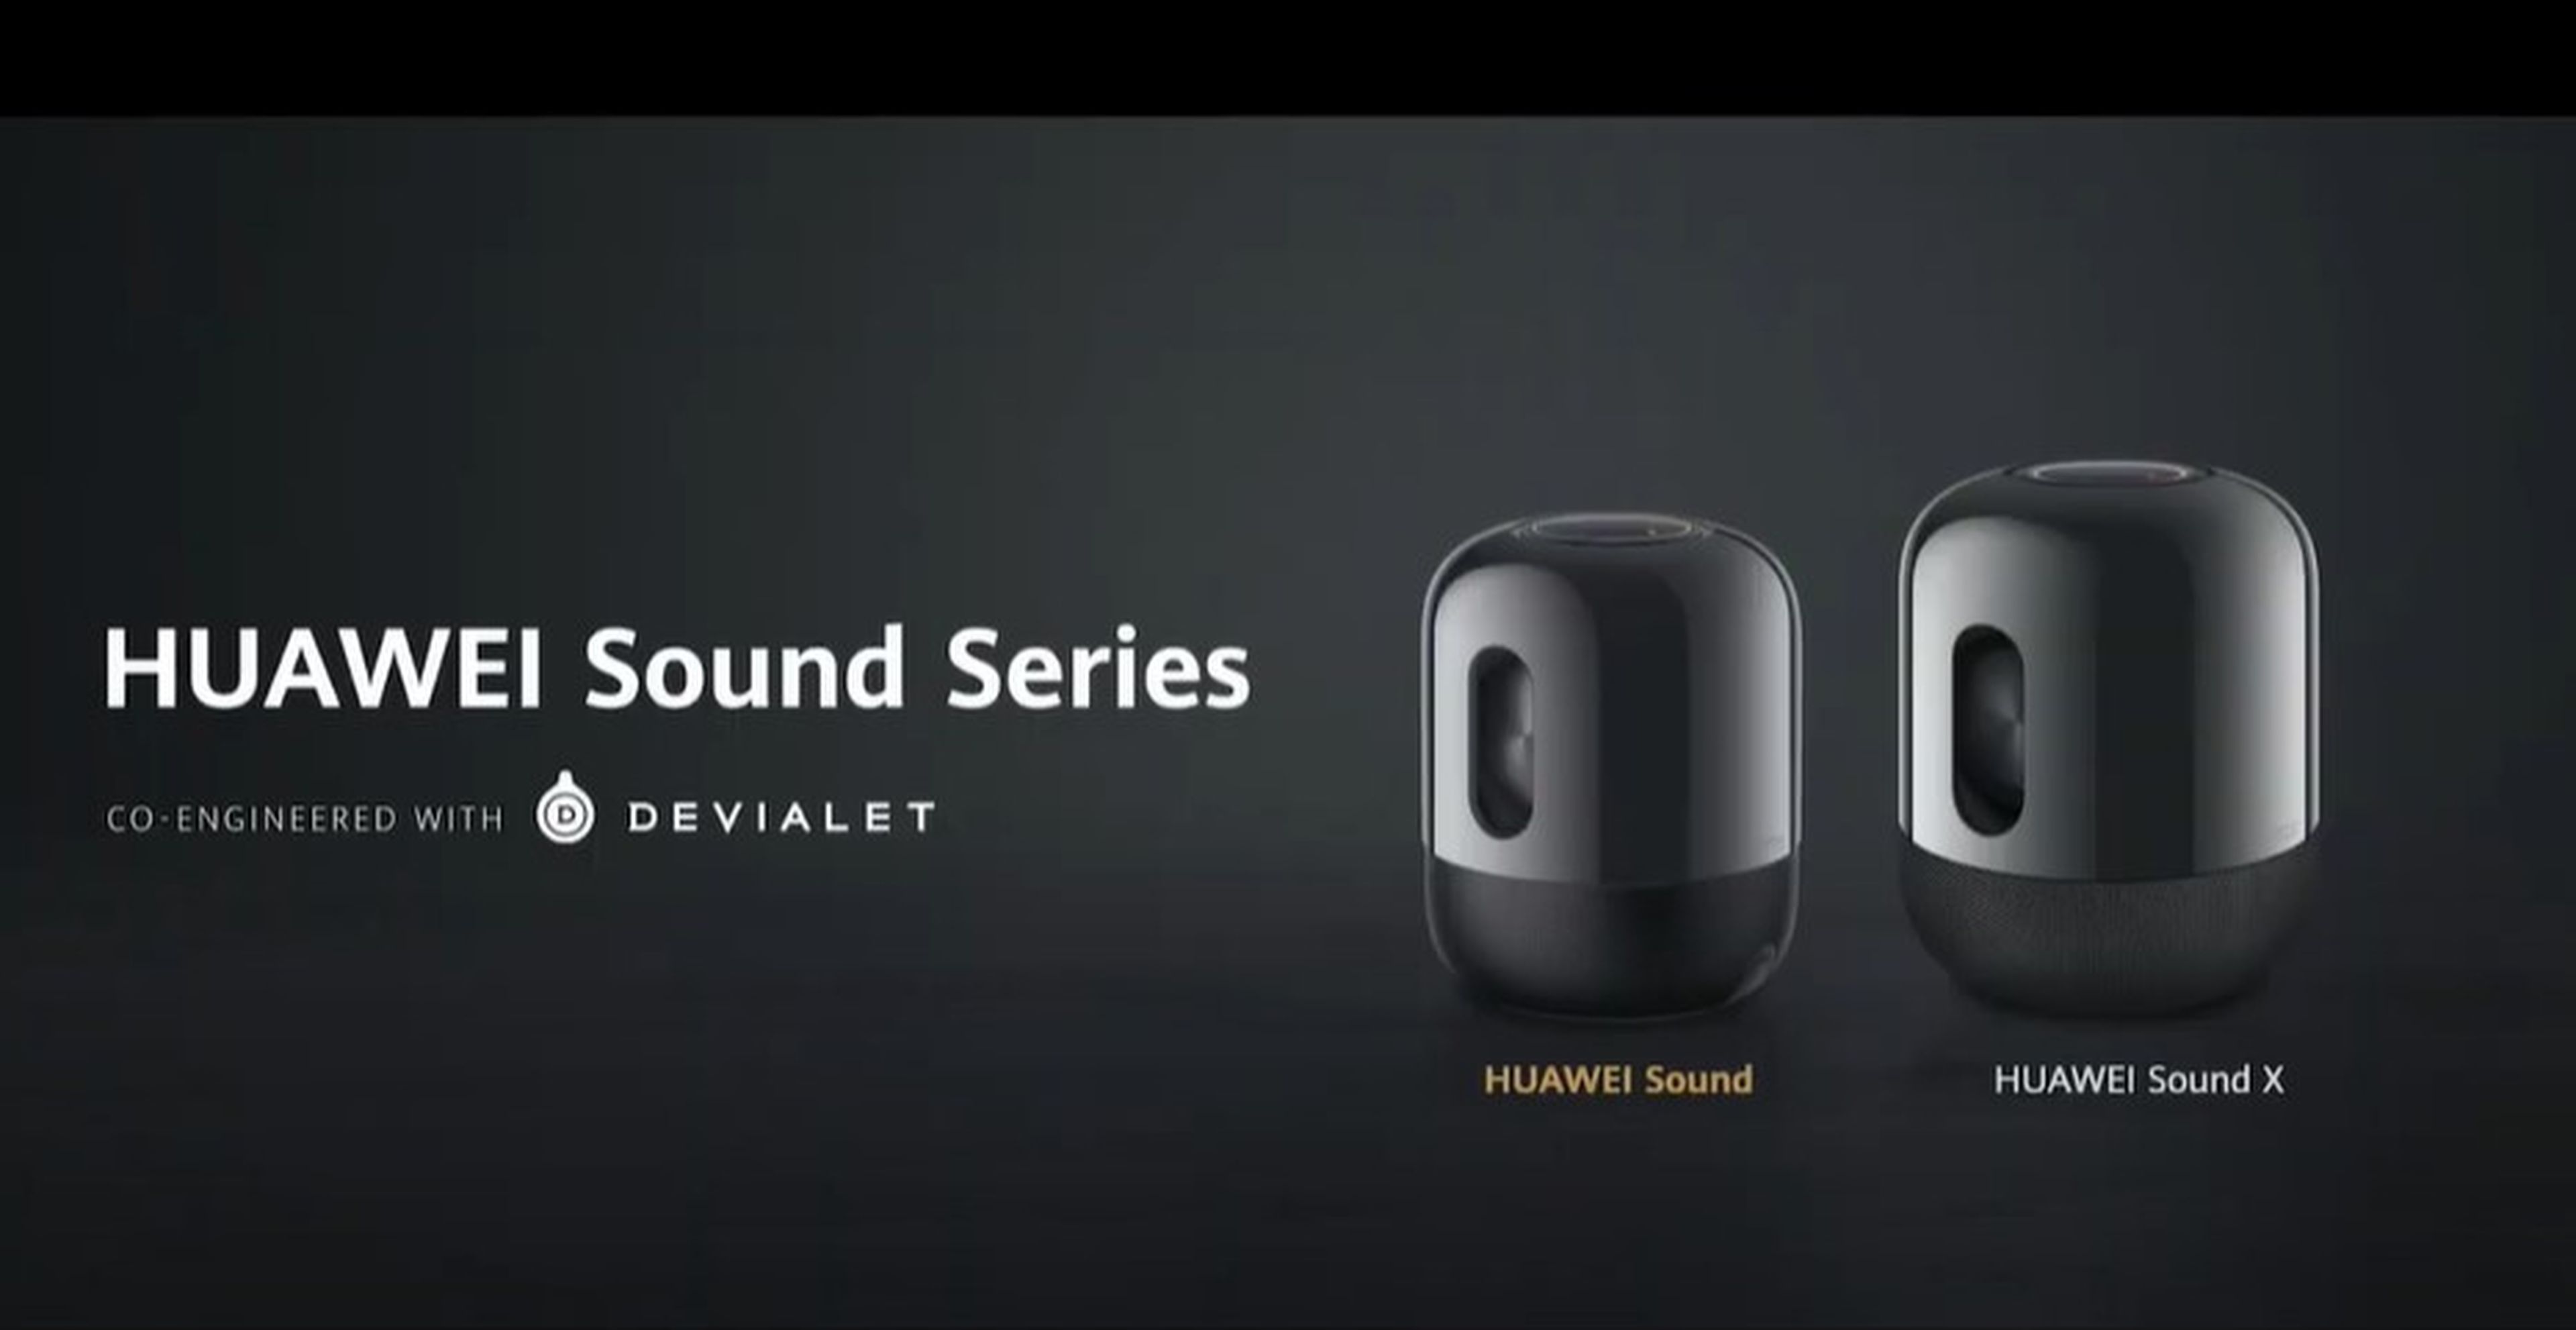 Huawei Sound Series